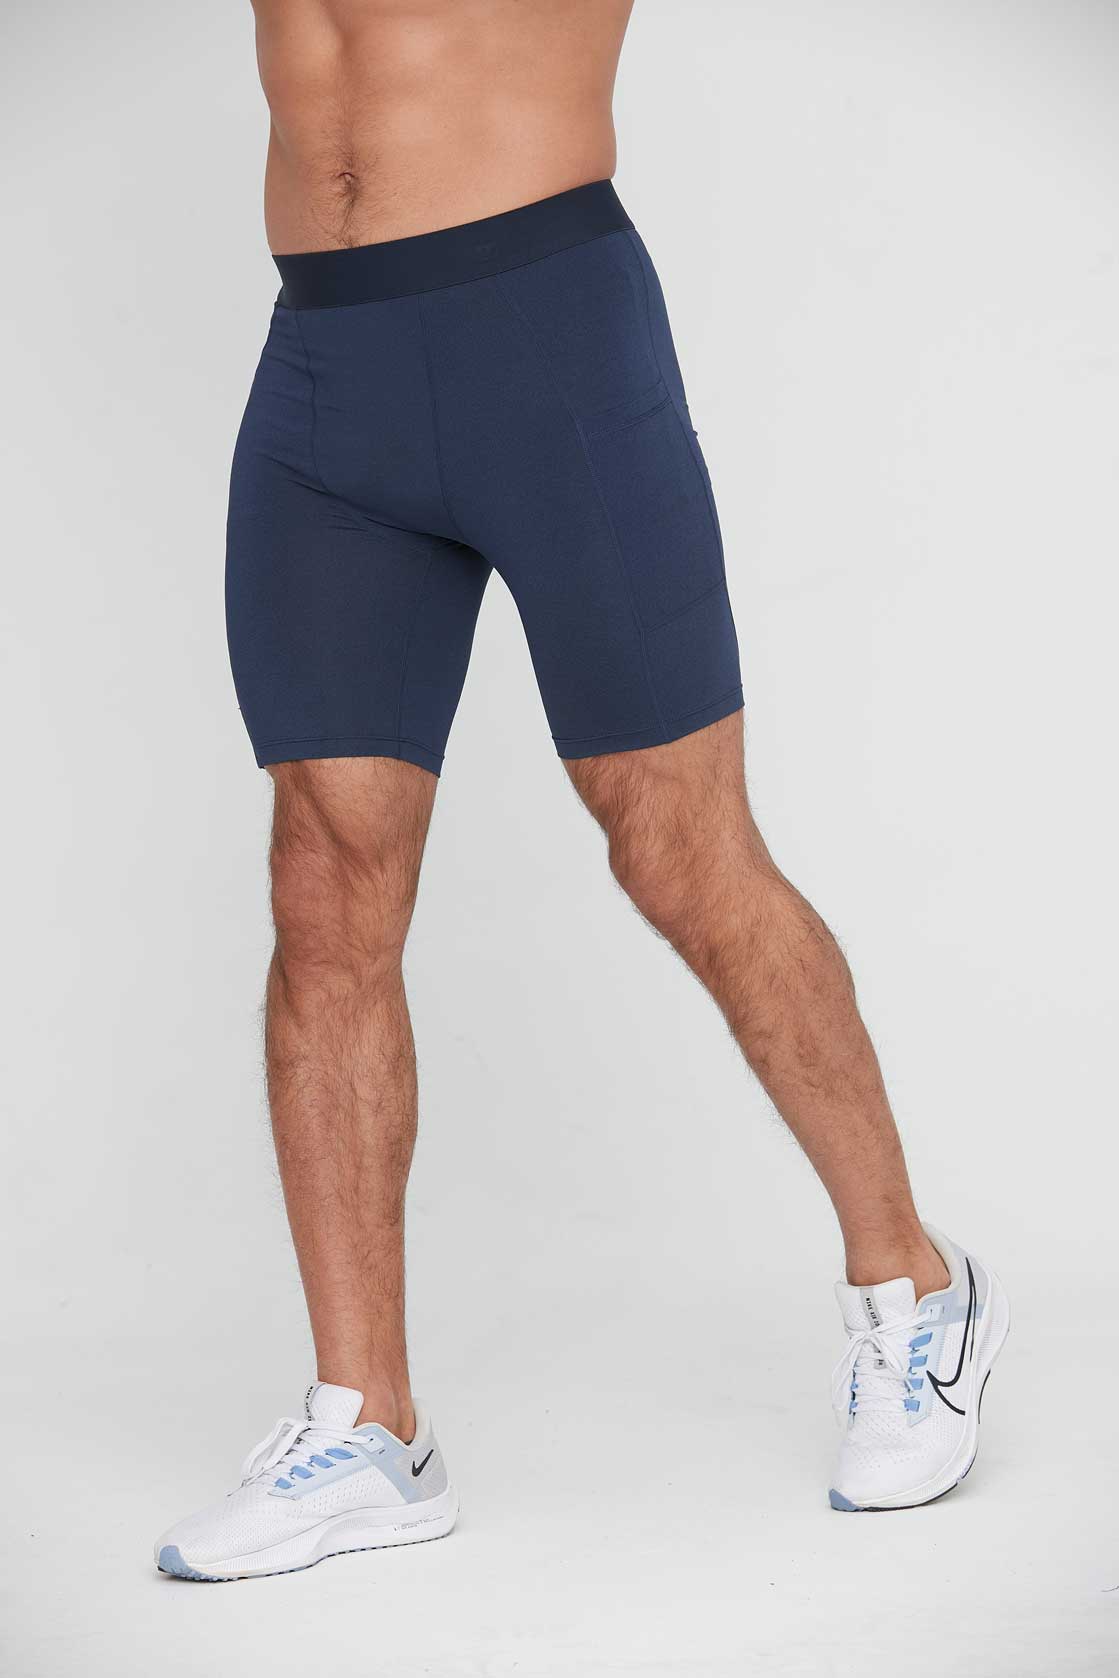 Mens Basketball Tight A Long A Short Capri Pants Gym Compression